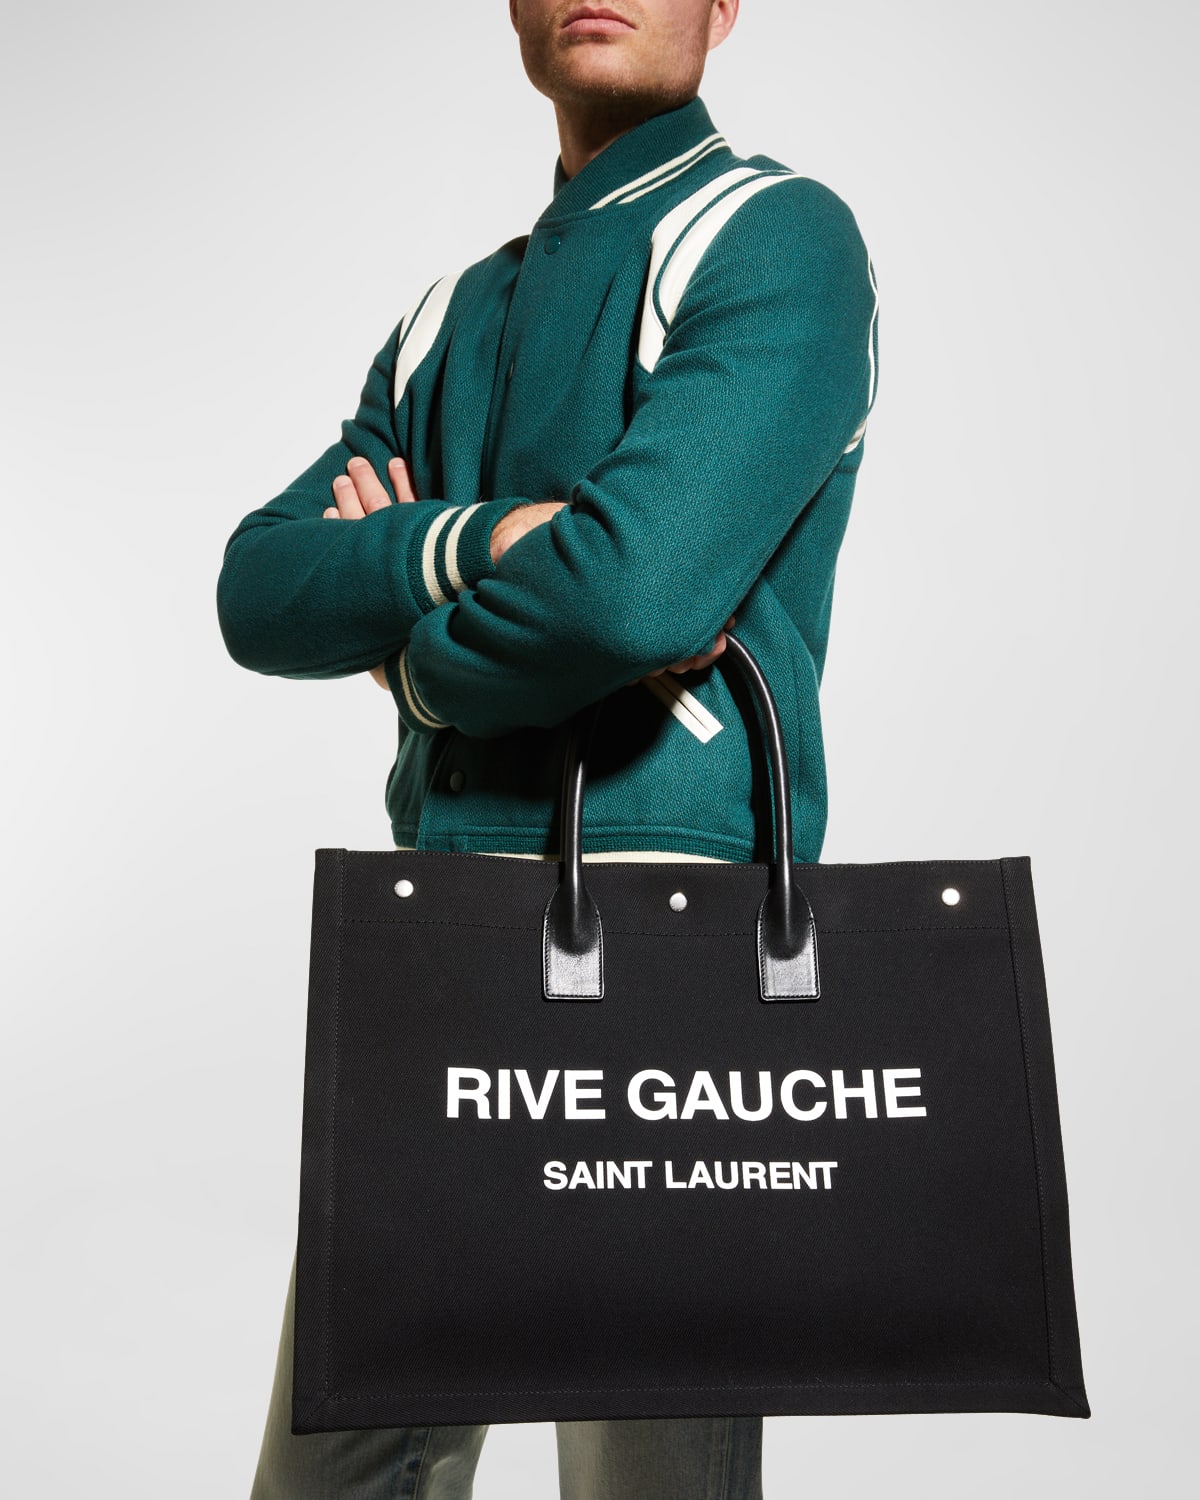 Saint Laurent Men's Noe Rive Gauche Canvas Tote Bag In Nero/bianco